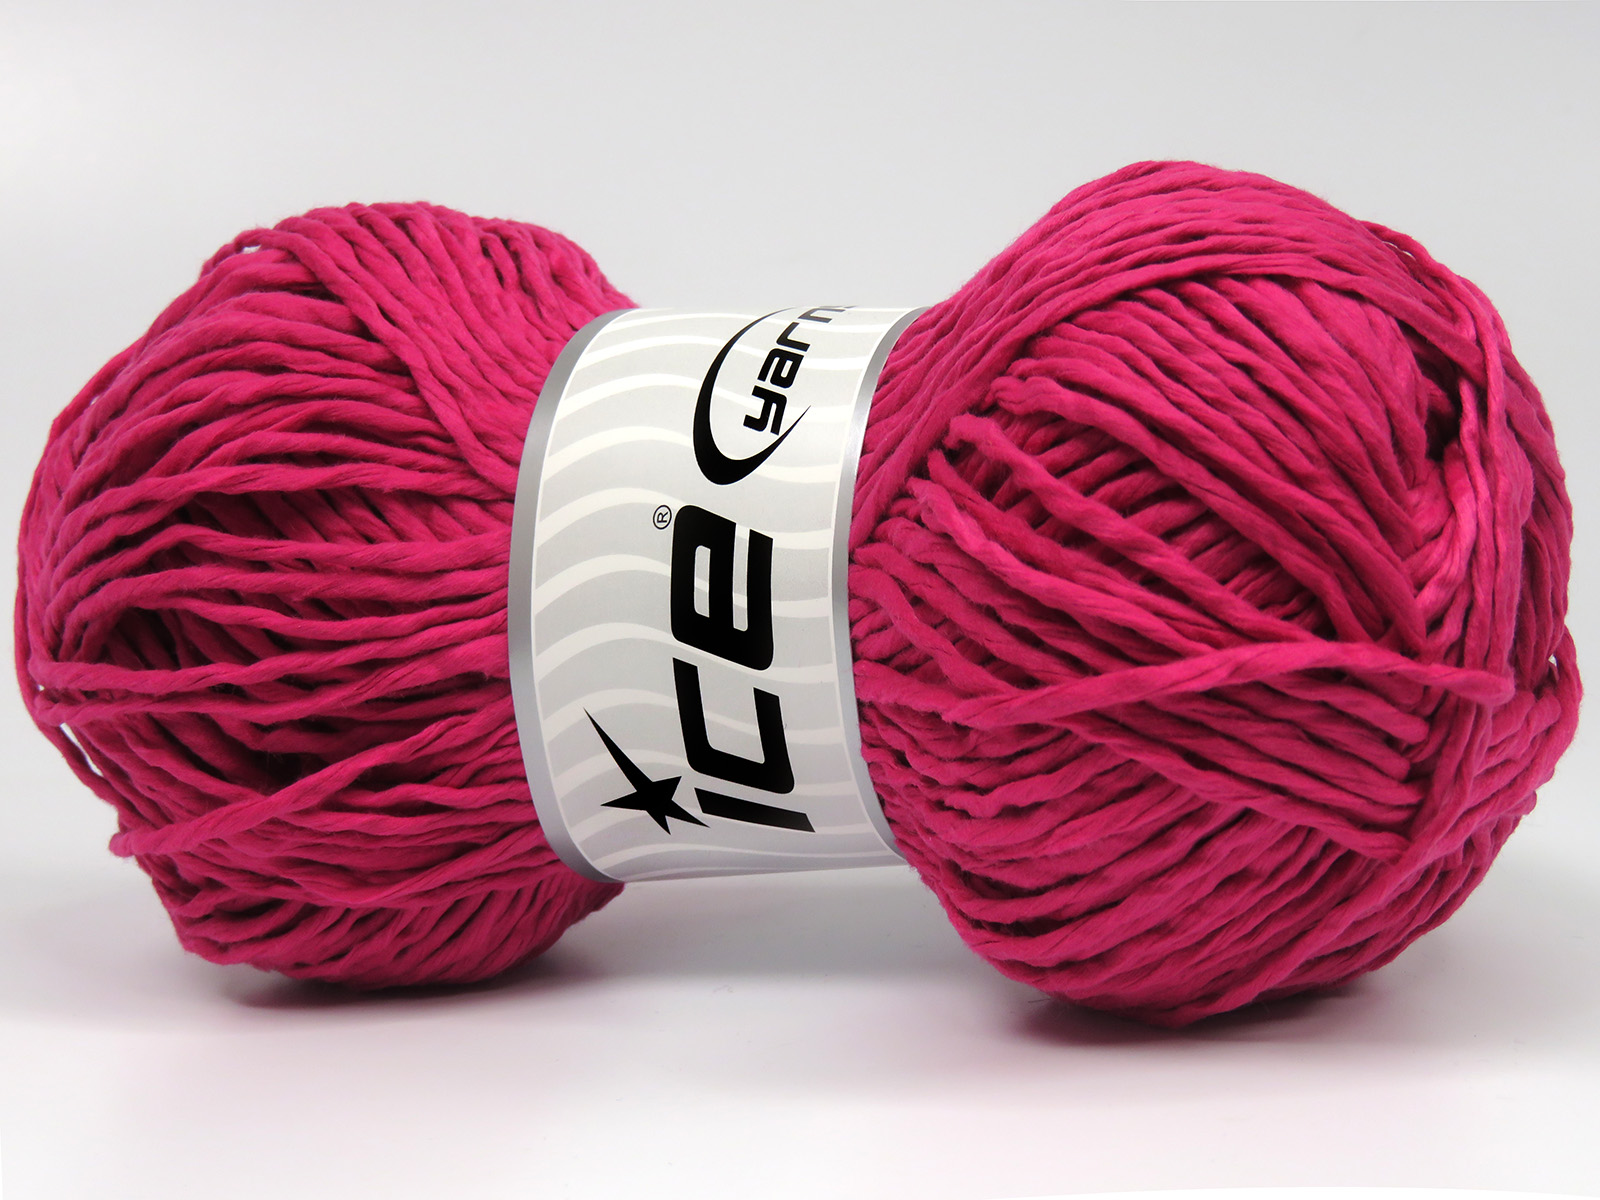 NEW PINK Cotton Cake, 3.53 Oz, Cotton Yarn, Pink Yarn for Crocheting and  Knitting, DK Yarns 